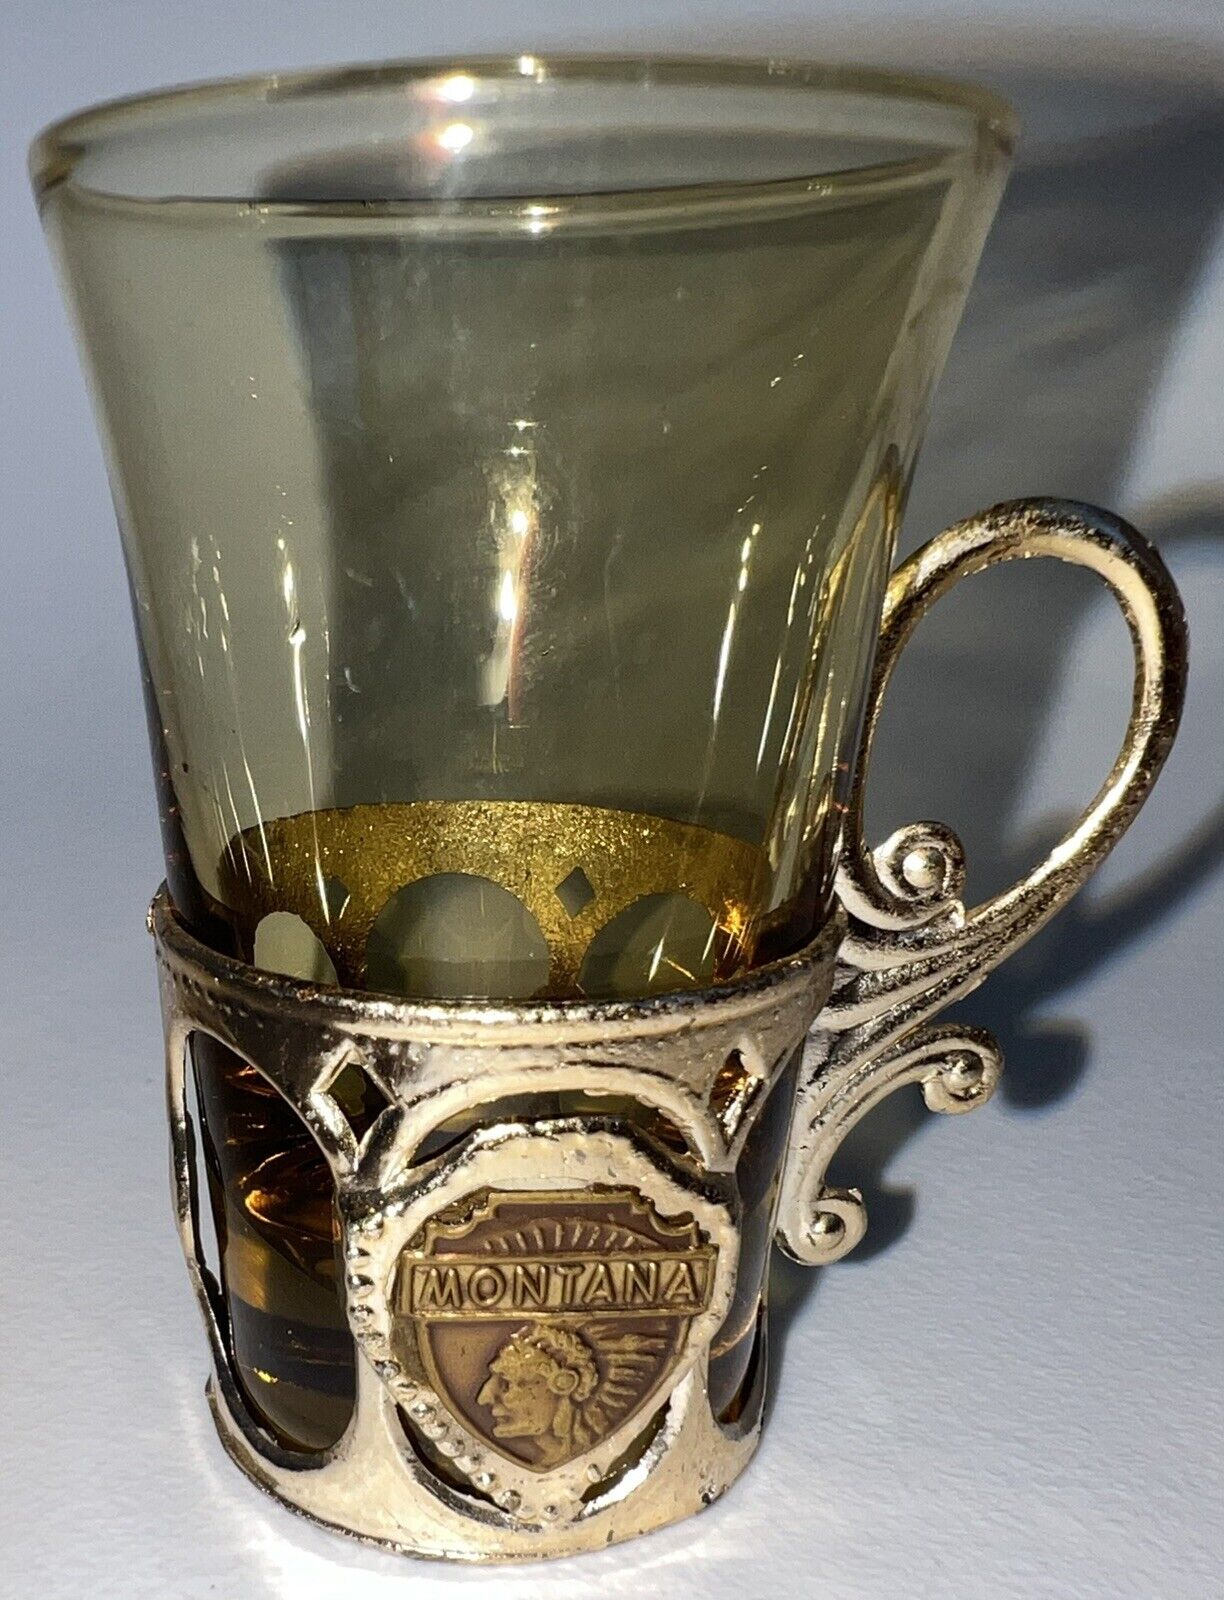 VTG Montana Souvenir Amber Shot Glass Ornate Holder Osaka Glass Wares Japan 2.5”